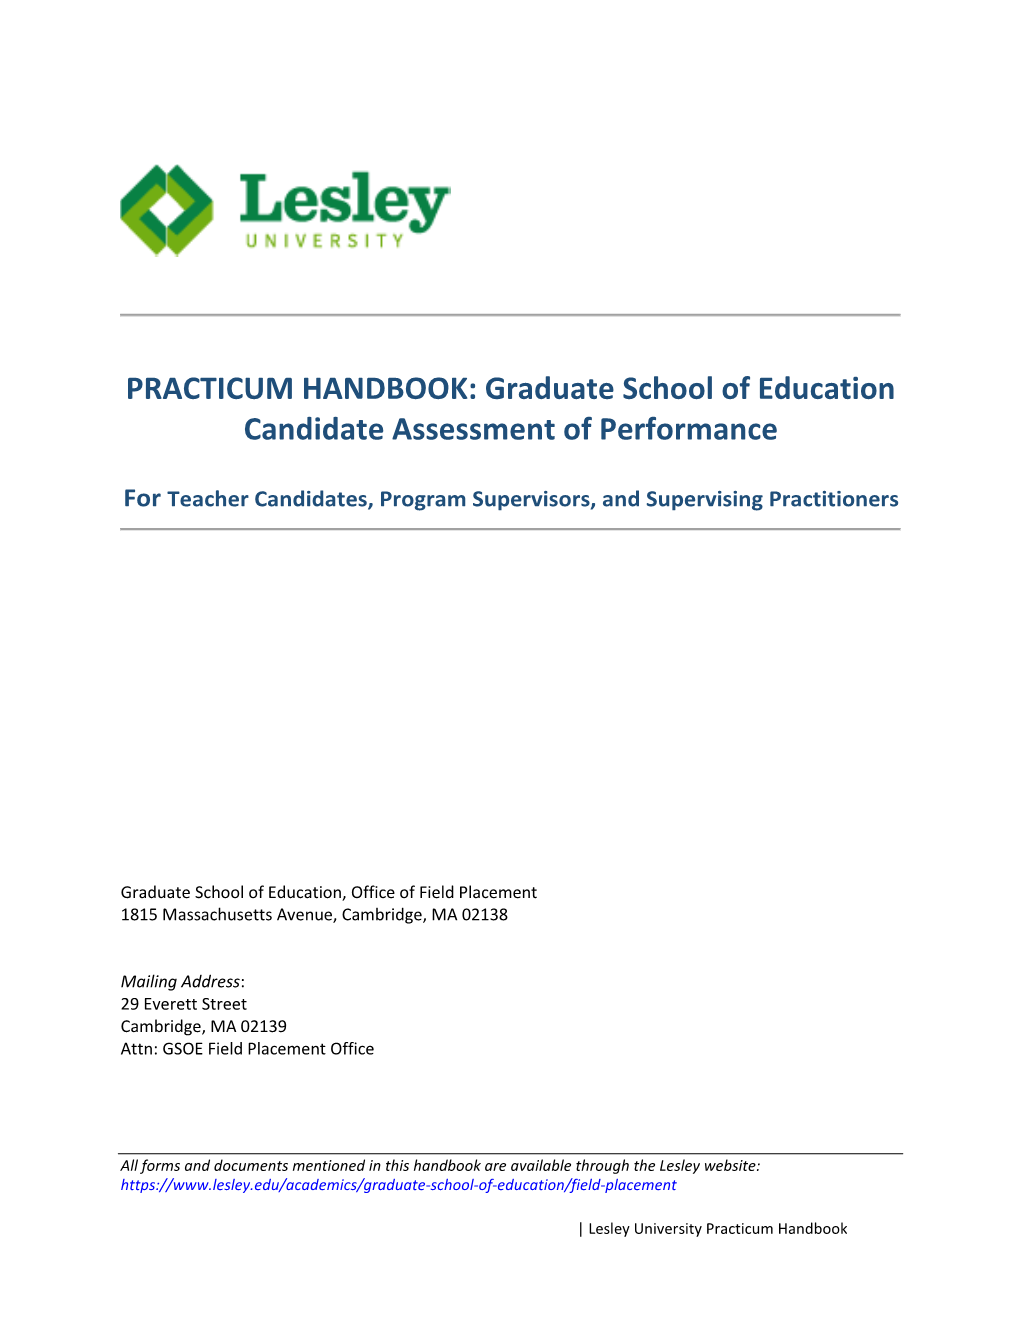 PRACTICUM HANDBOOK: Graduate School of Education Candidate Assessment of Performance